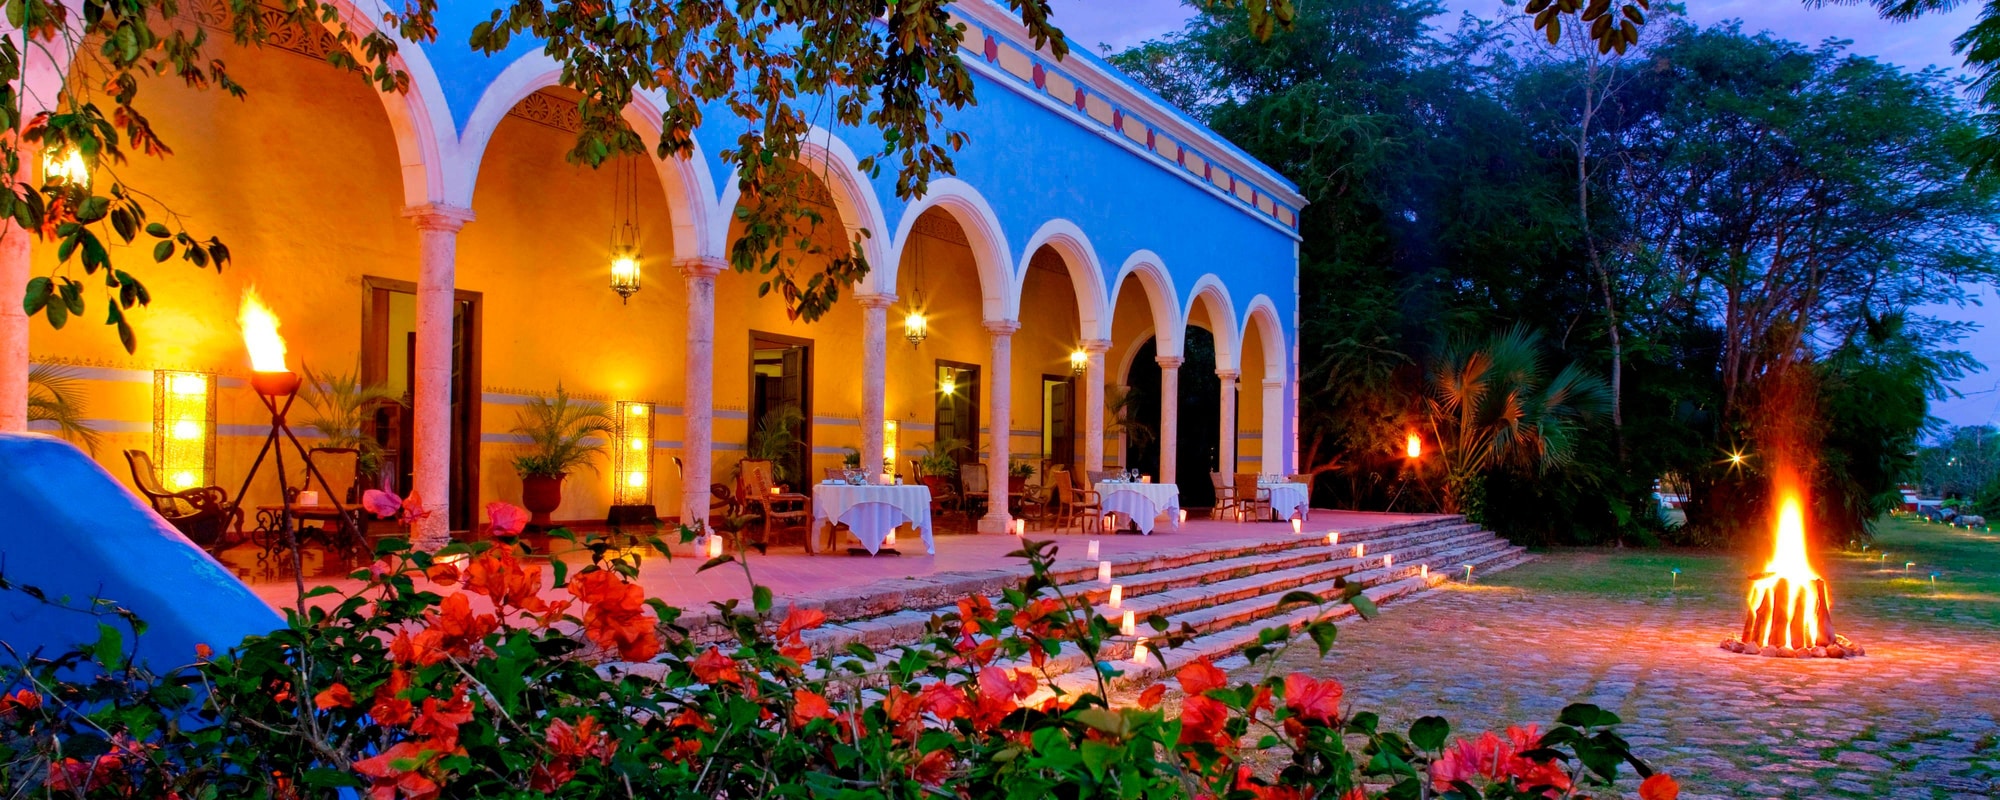 Hoteles boutique en Santa Rosa Yucatán | Hacienda Santa Rosa, Santa Rosa